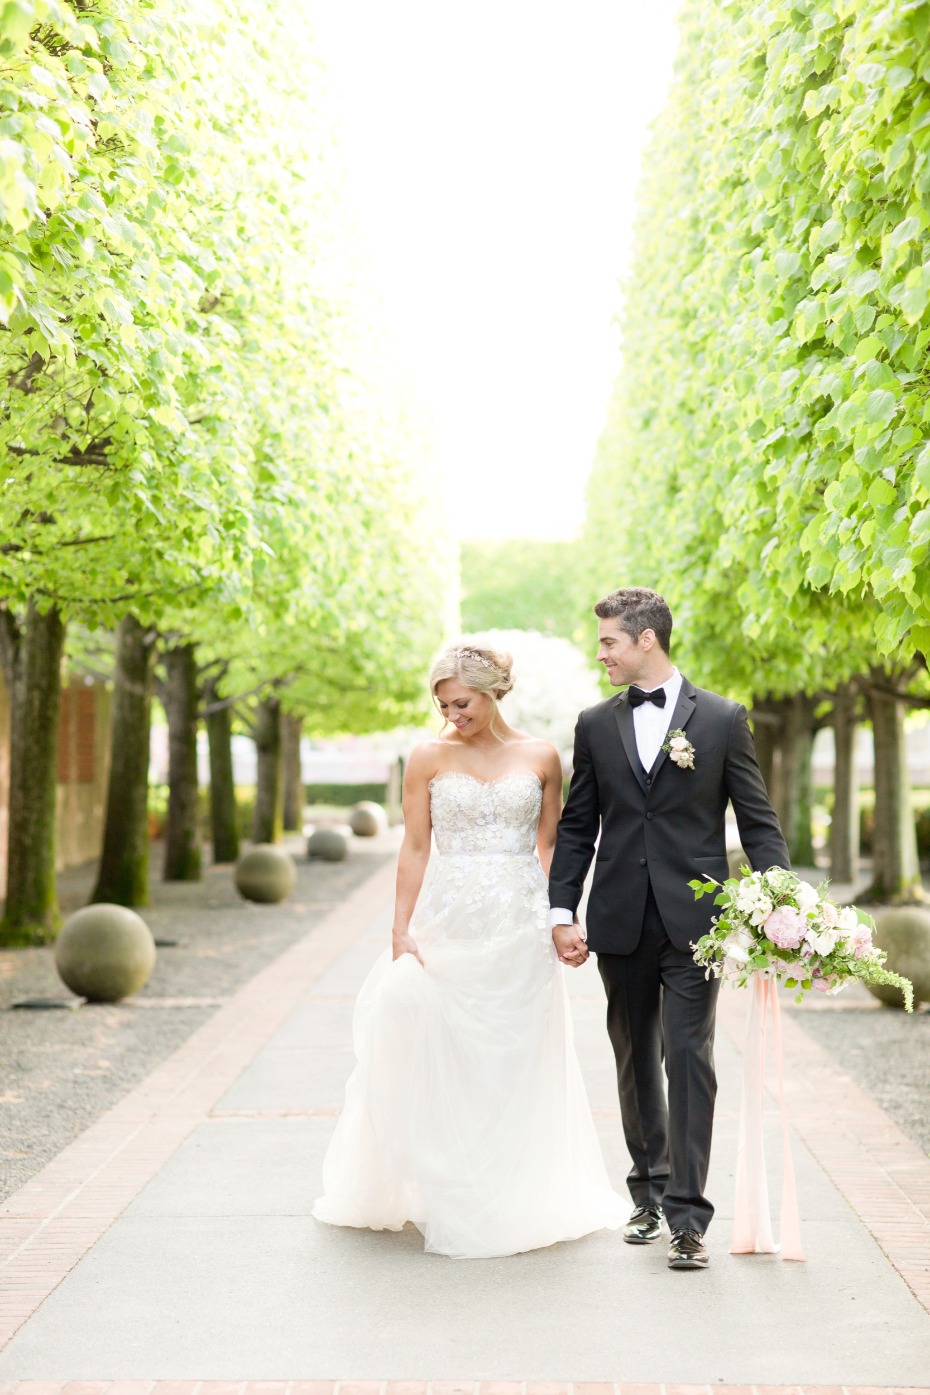 Luxurious garden wedding ideas